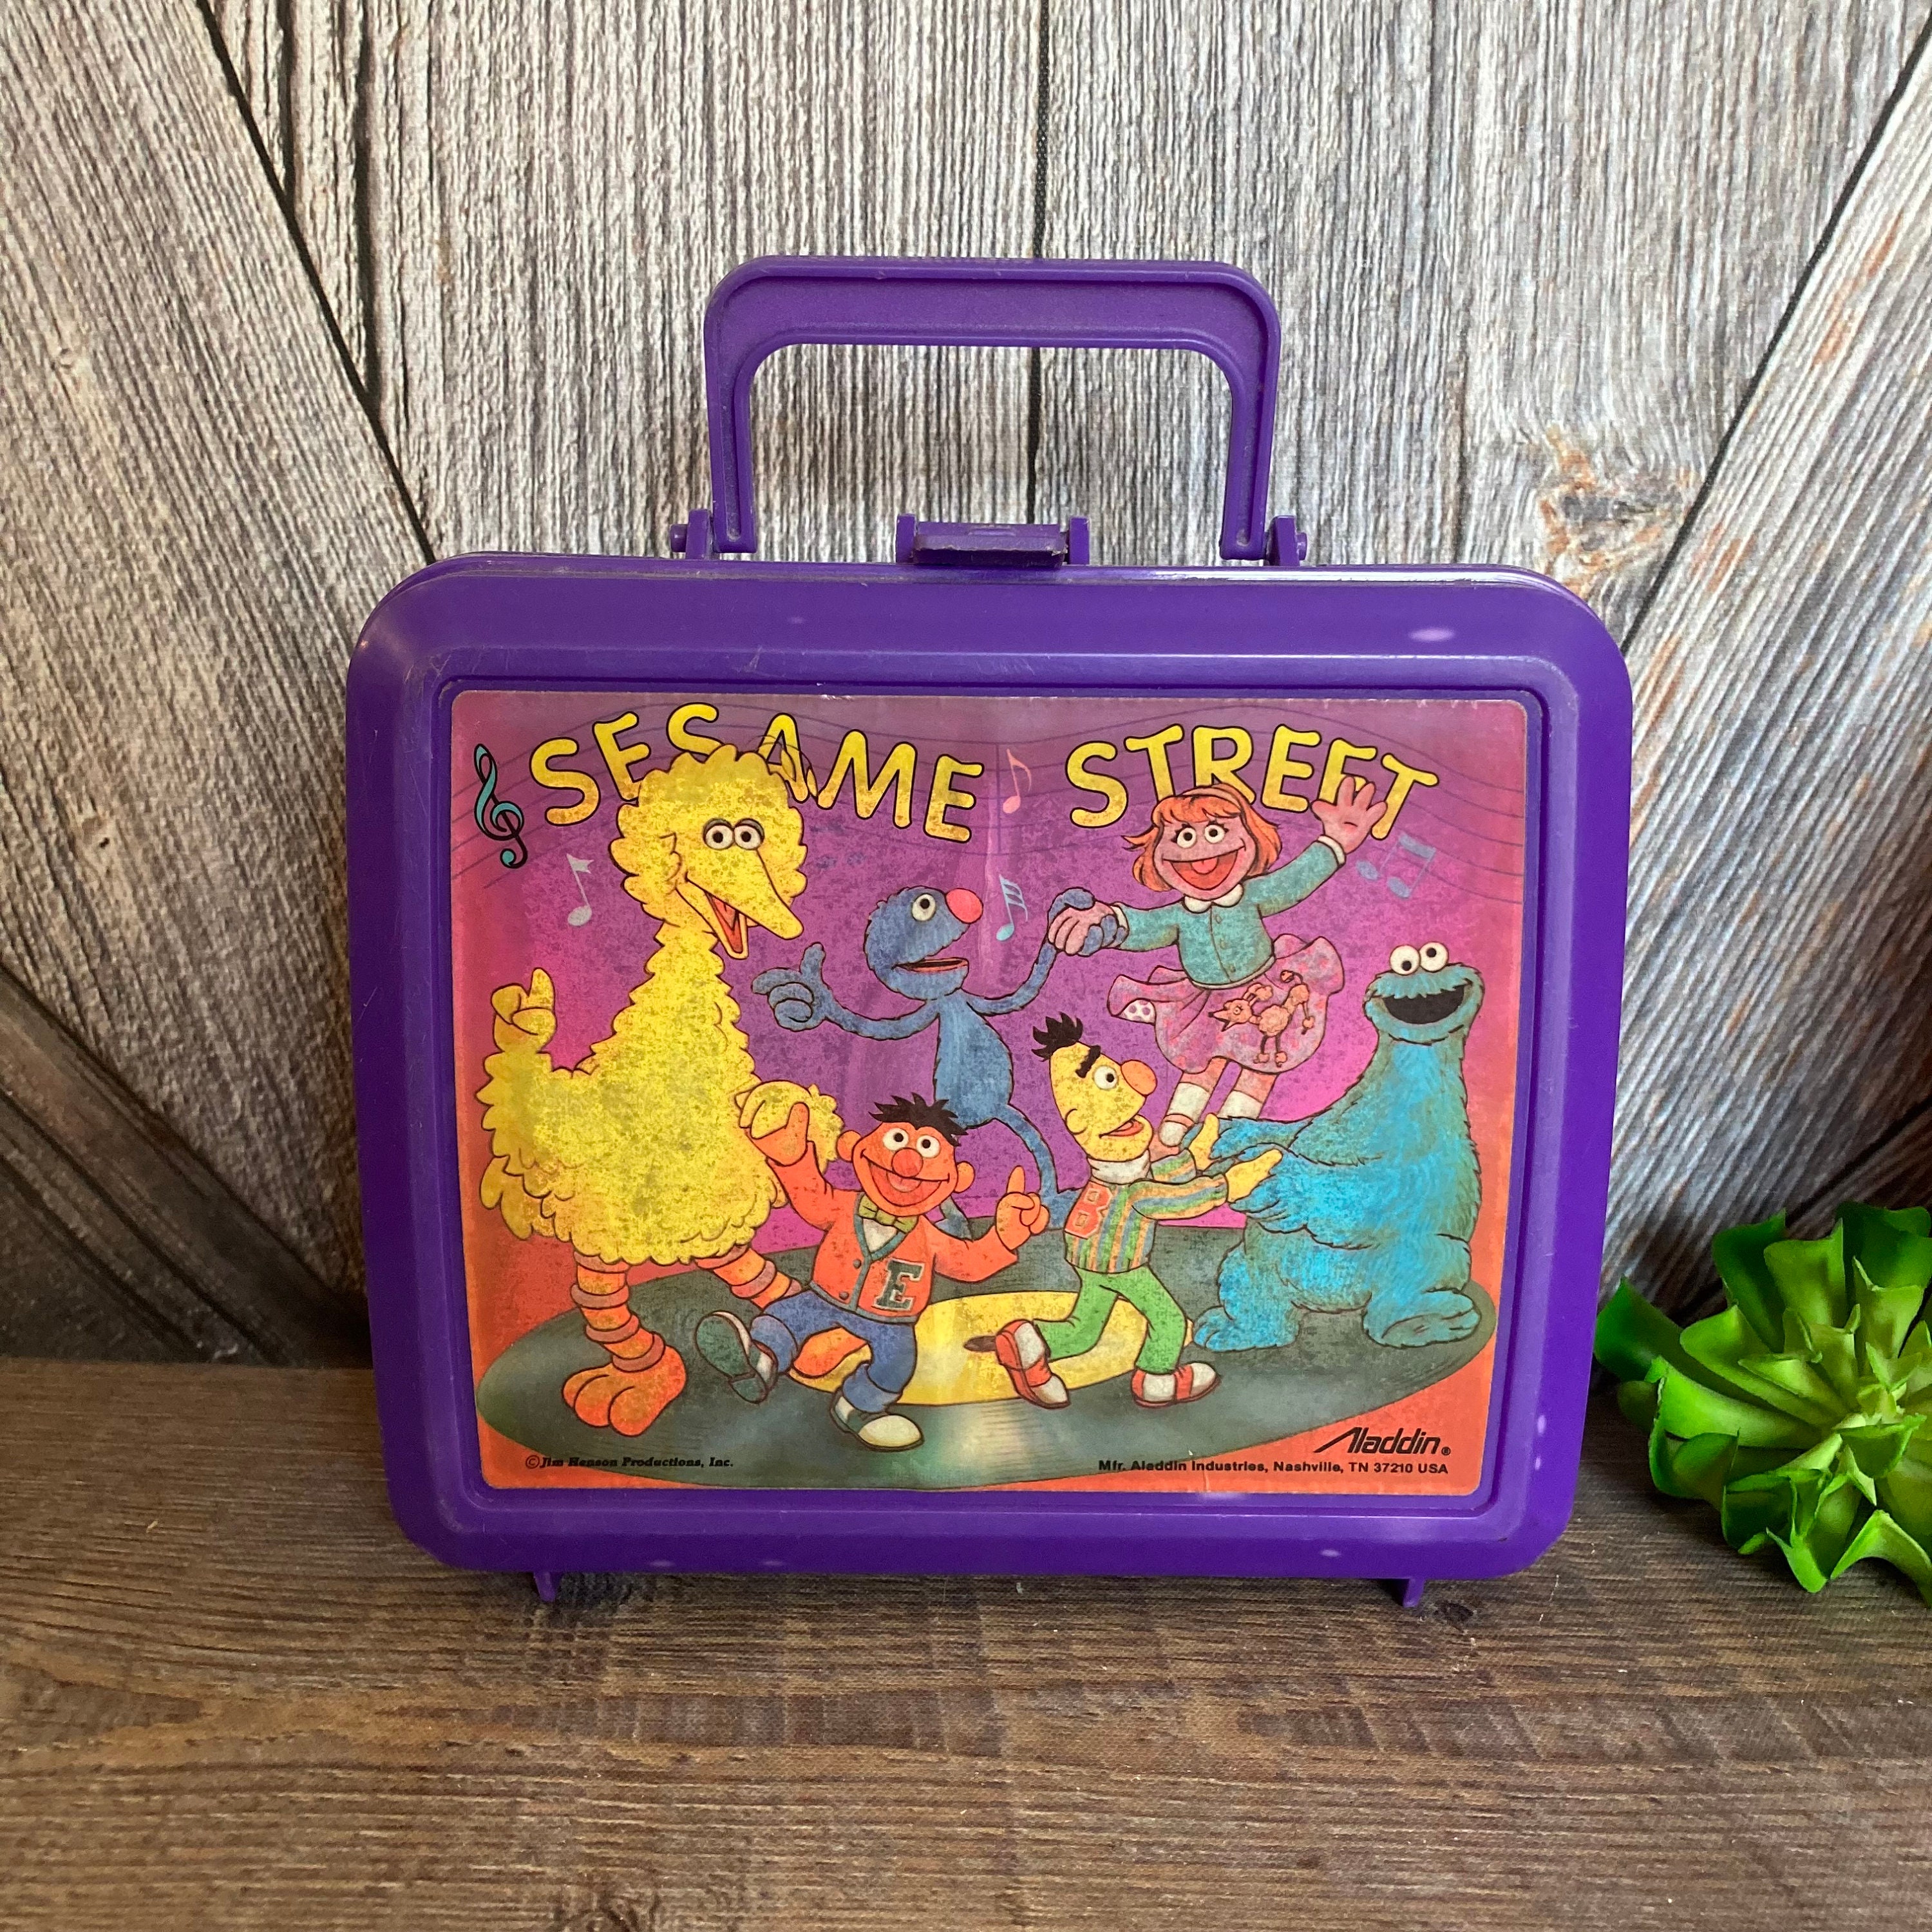 Sesame Street Elmo Boys Girls Soft Insulated School Lunch Box (One size, Multicolor)